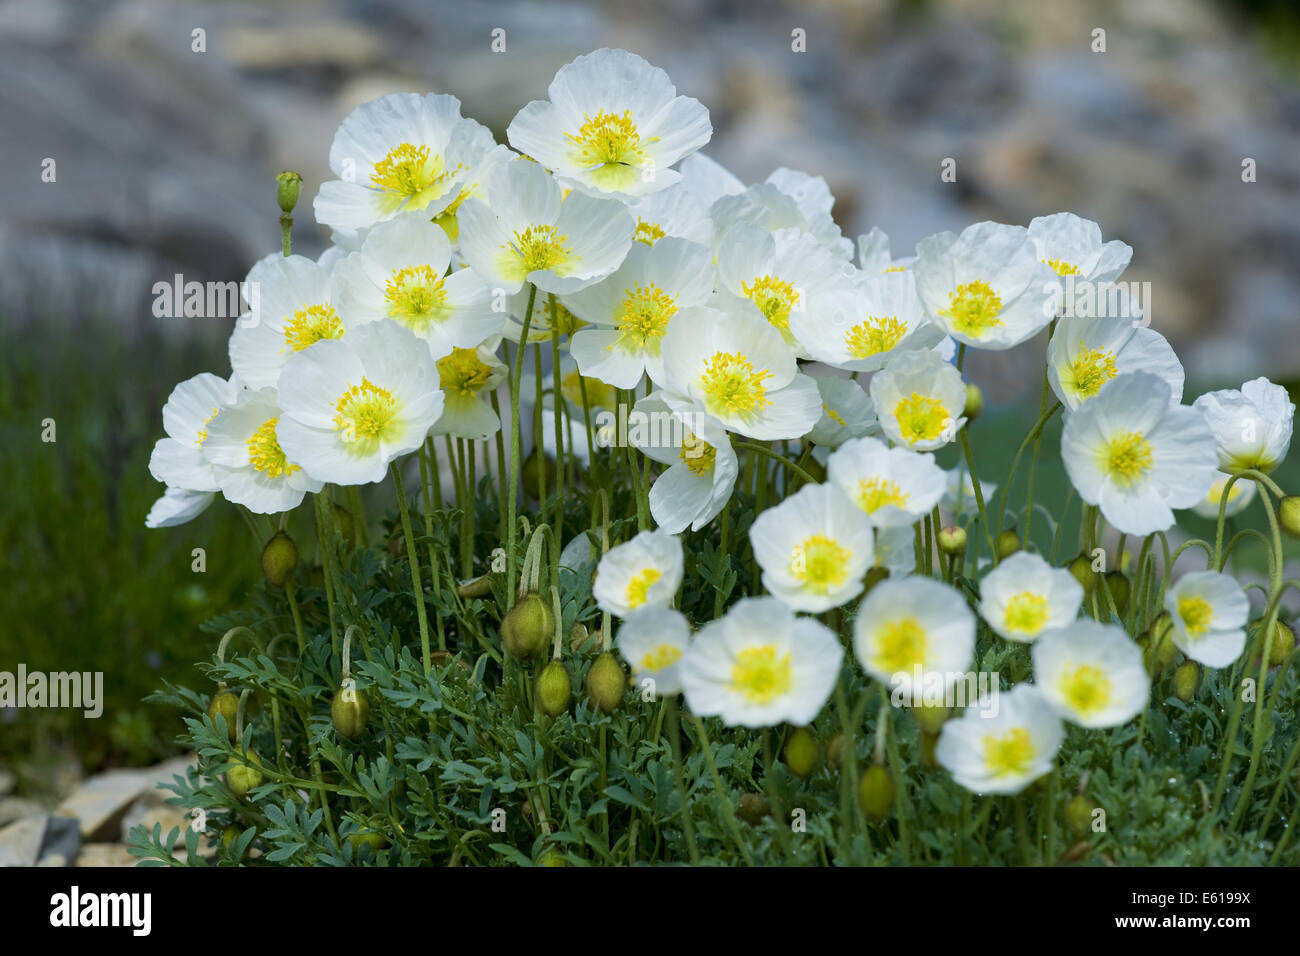 salzburg alpine poppy, papaver alpinum ssb. sendtneri Stock Photo